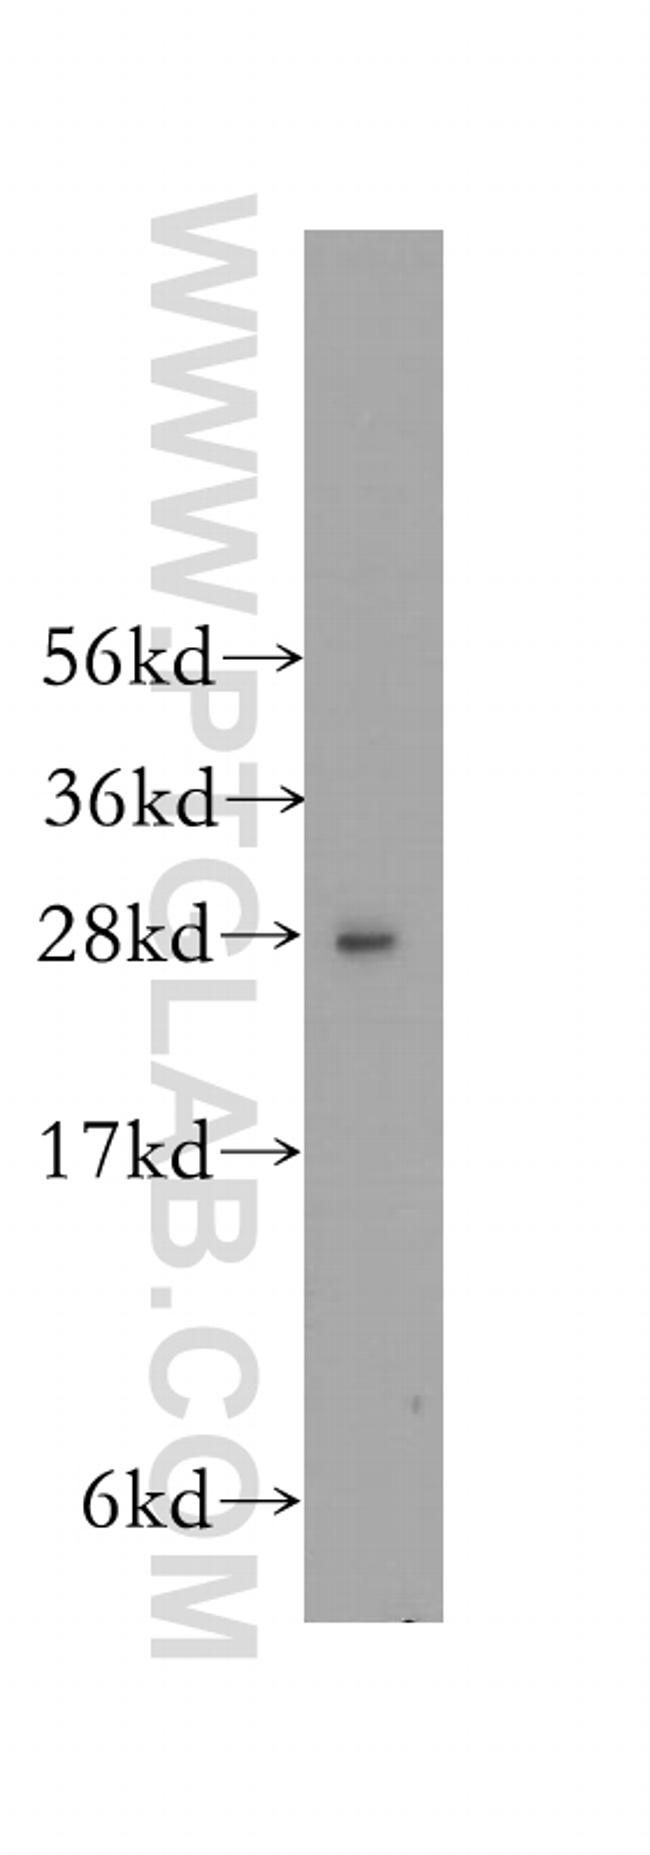 HS2ST1 Antibody in Western Blot (WB)